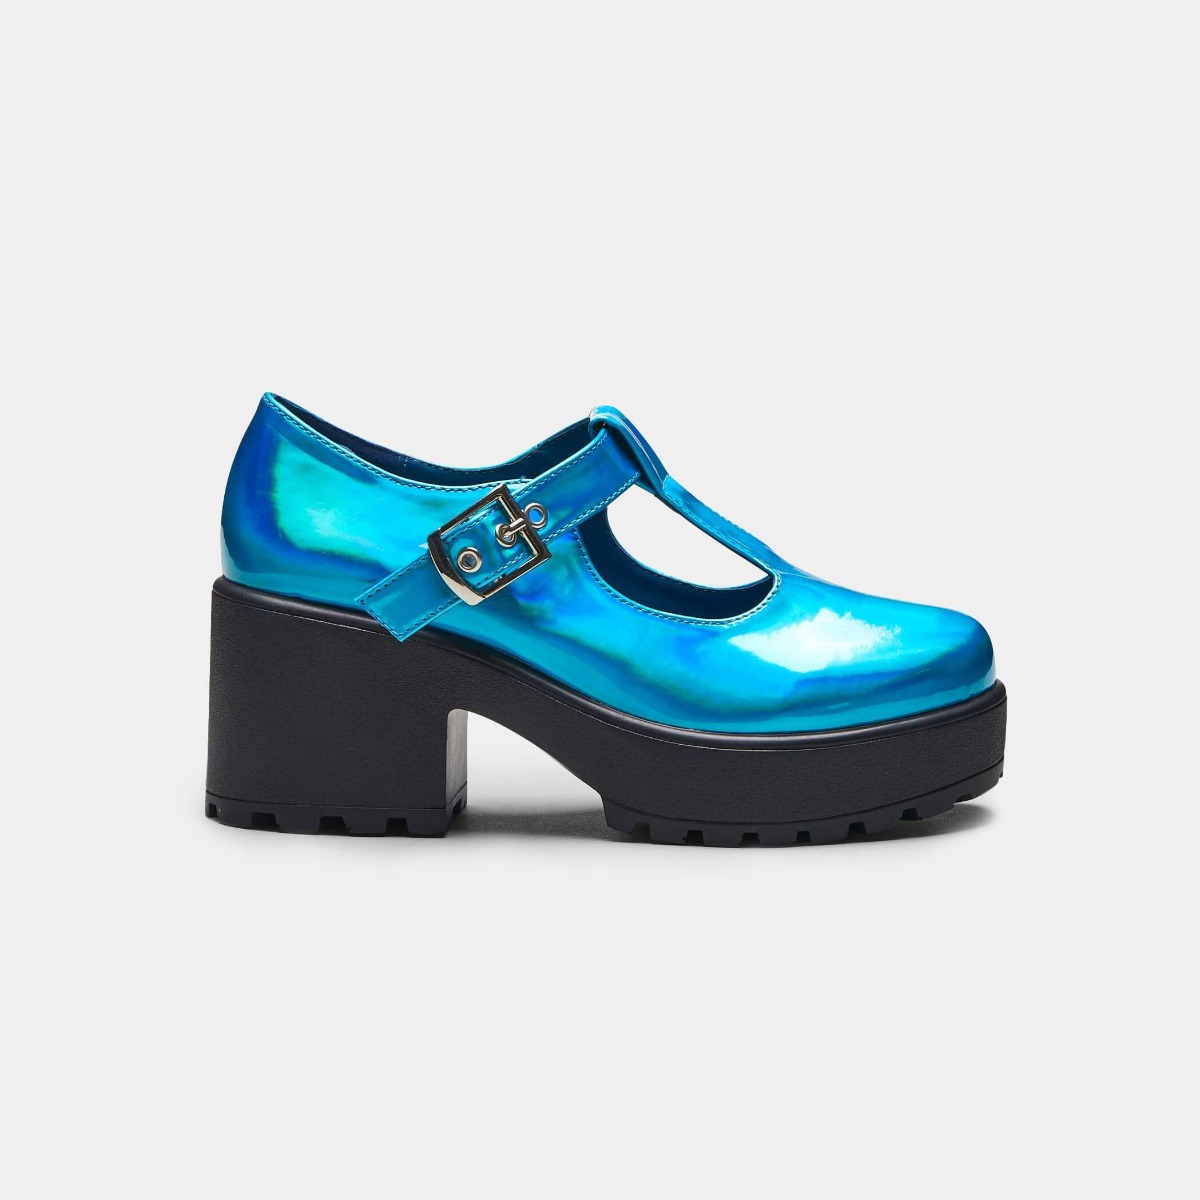 kfnd35mblubb_chaussures-mary-janes-lolita-glam-rock-sai-bleu-metallique